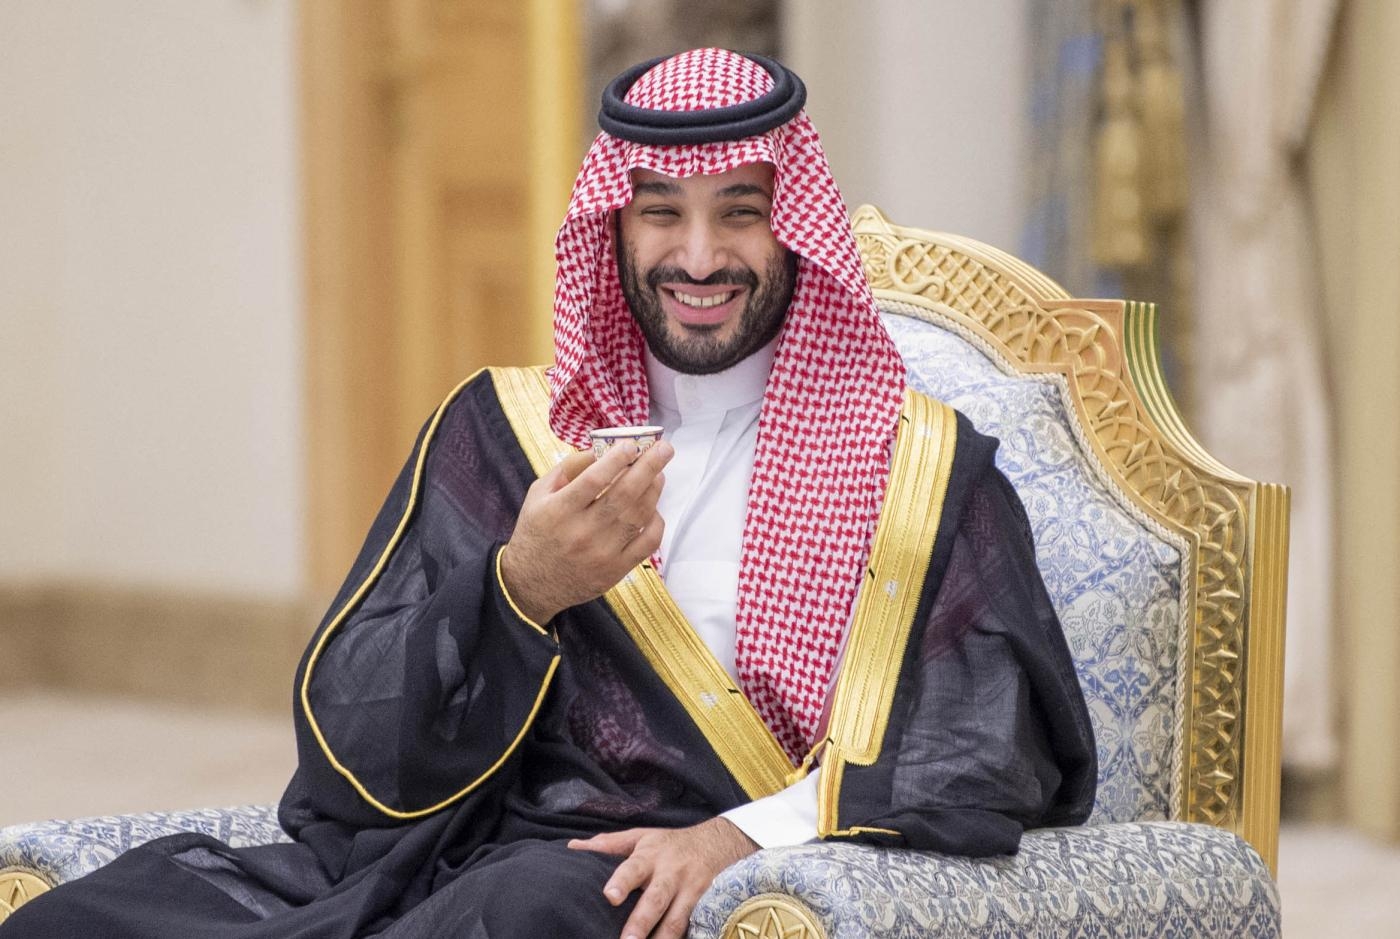 Arabie saoudite: Mohammed Ben Salmane ouvrira le premier magasin d’alcool !